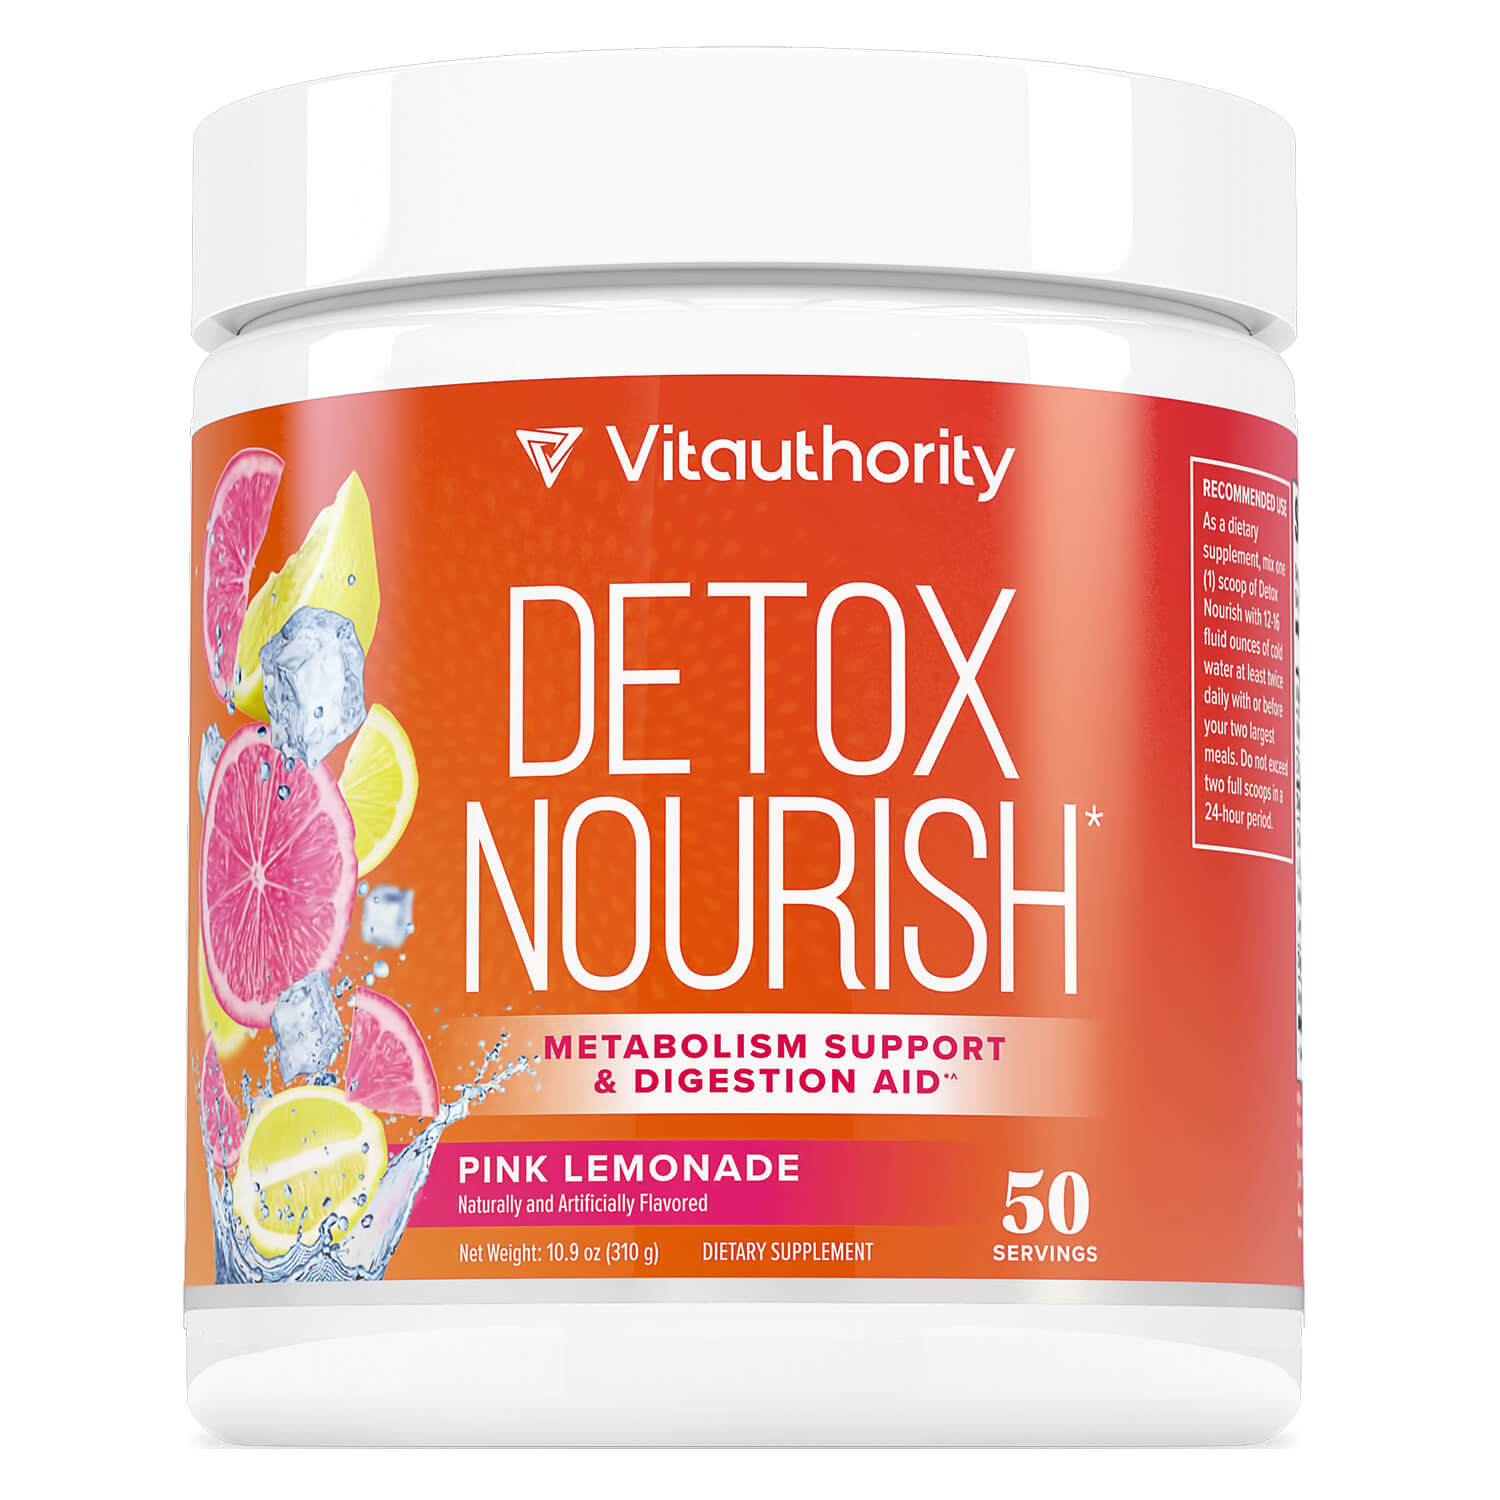 Detox Nourish Anti-Bloat Digestive Aid